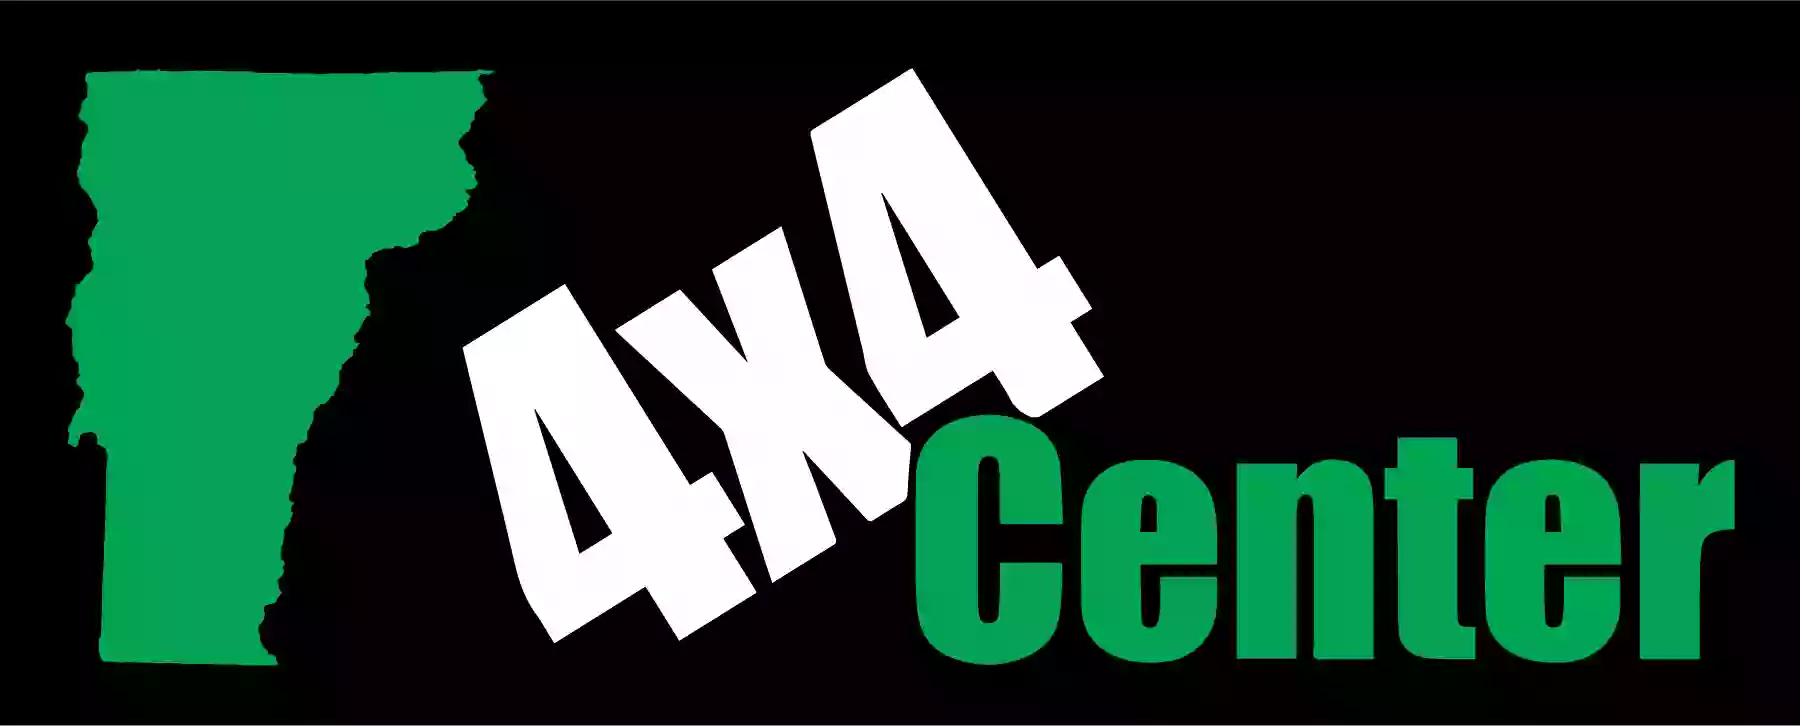 The 4x4 Center